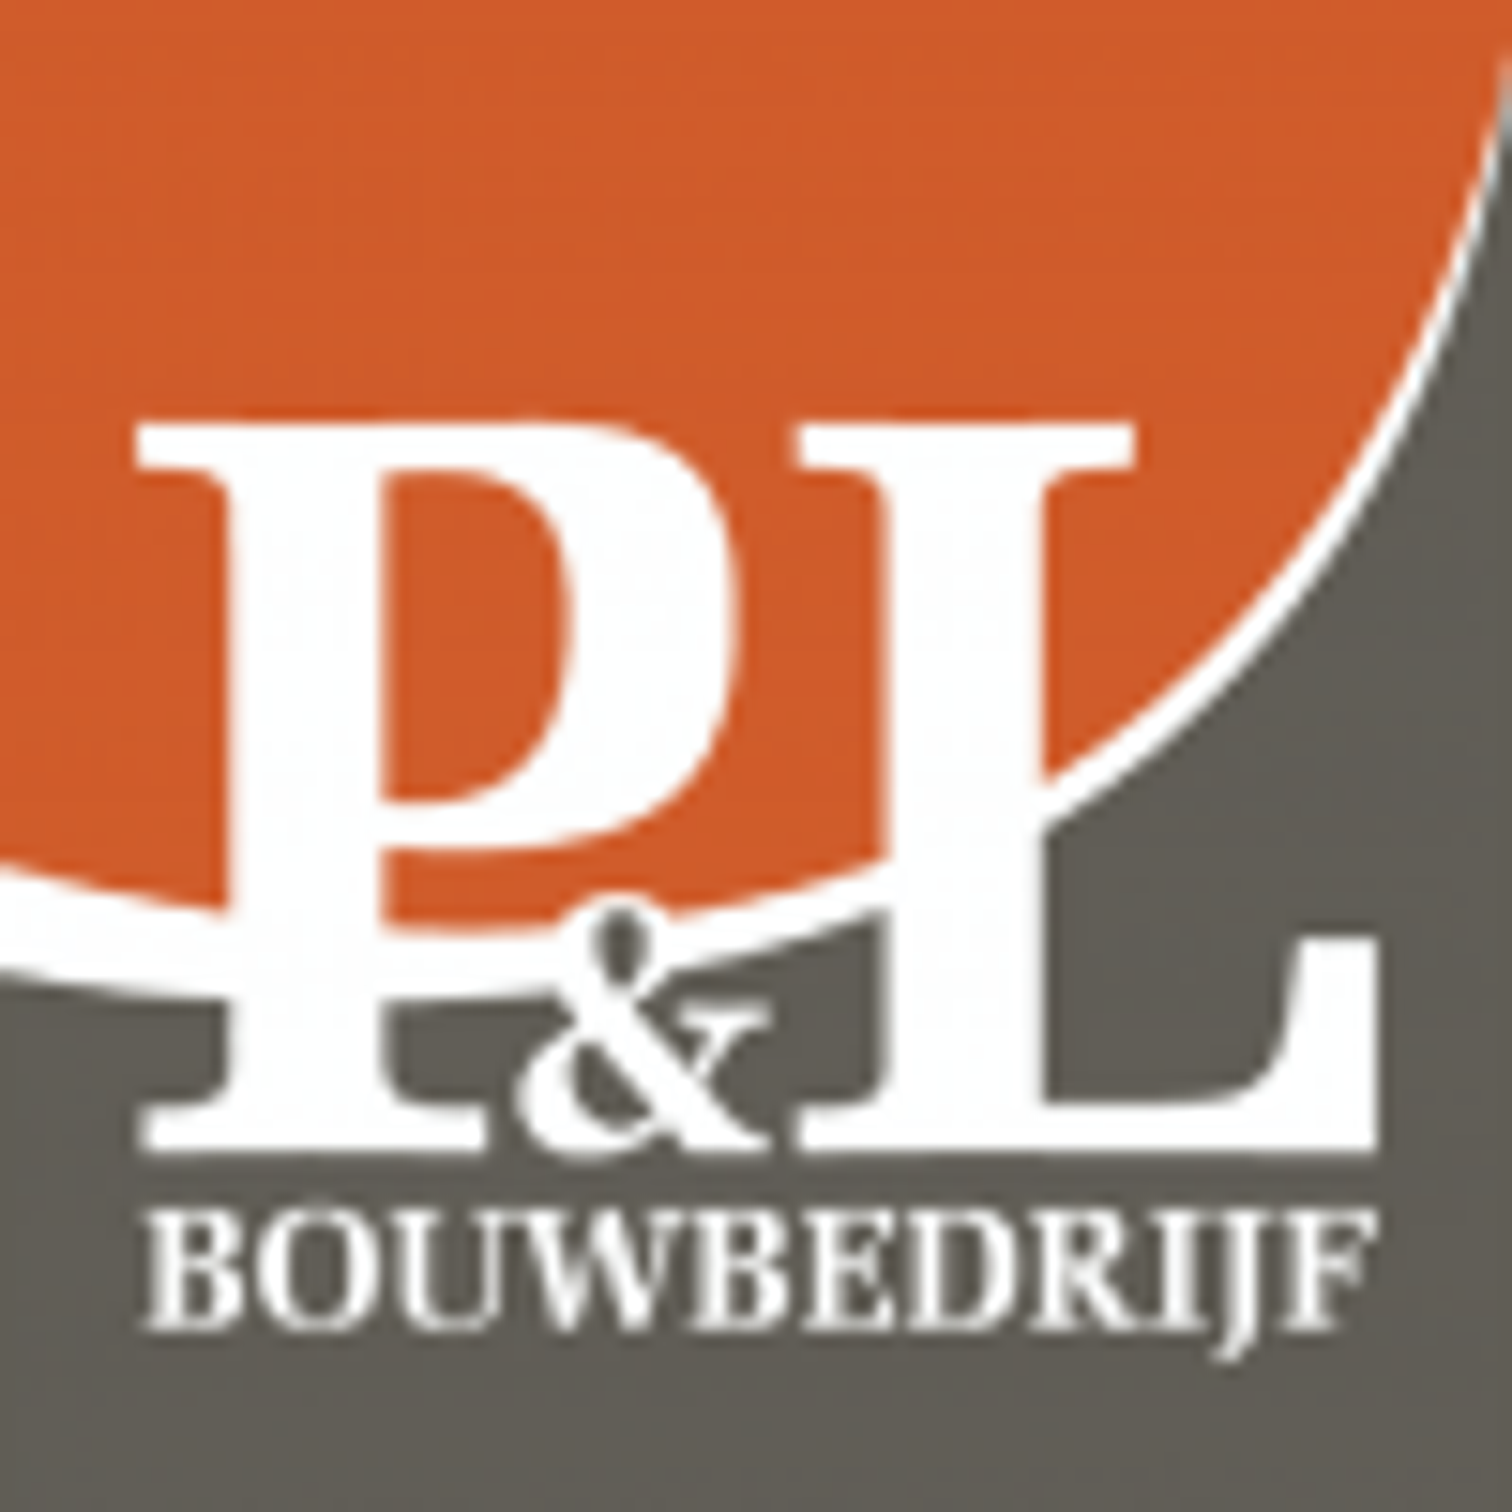 P & L Bouwbedrijf logo